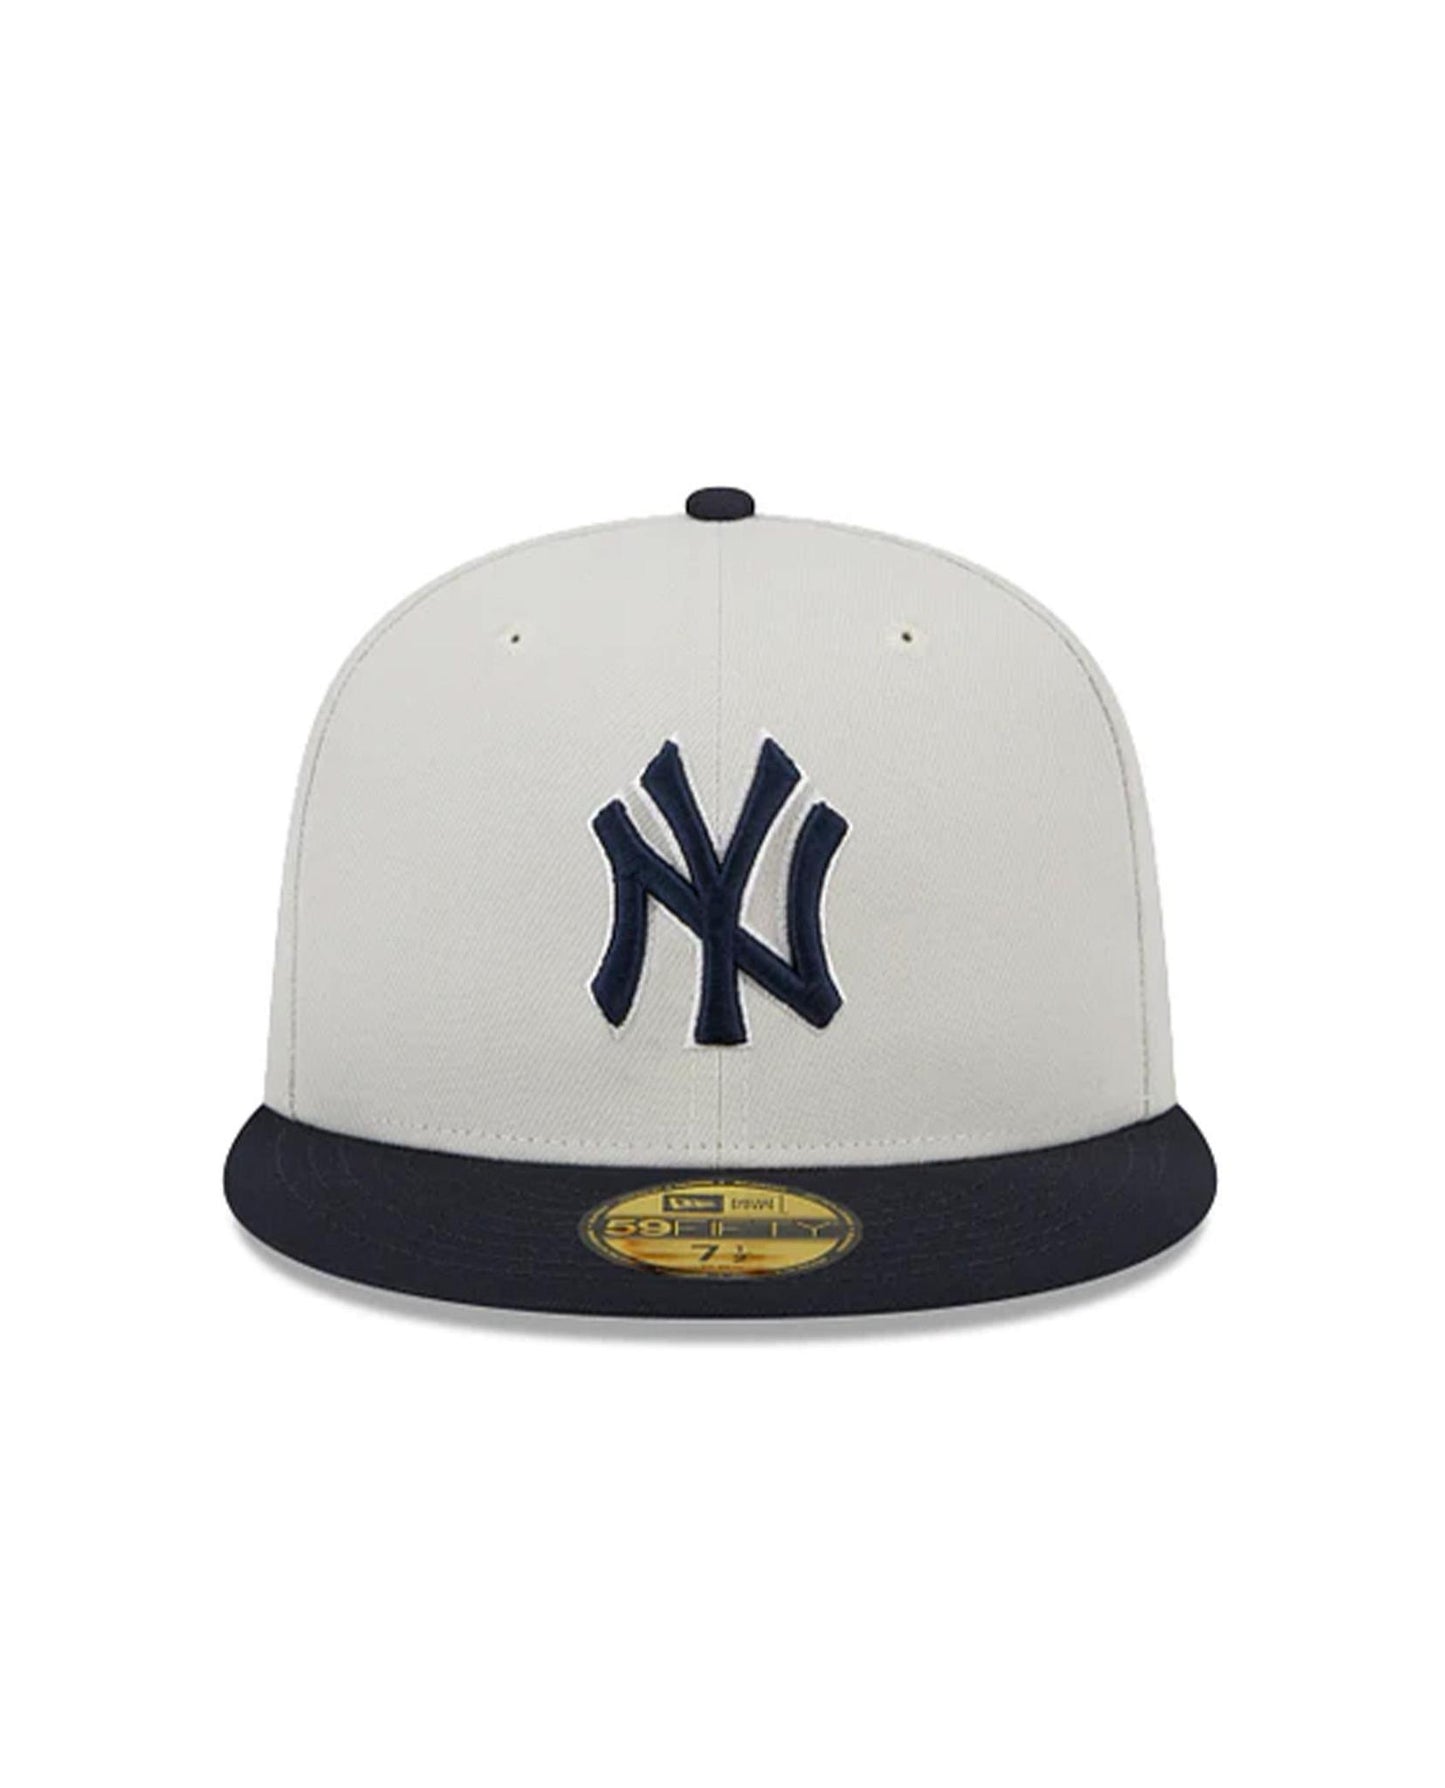 
                    
                      New Era New York Yankees Worldclass 5950 Fitted
                    
                  